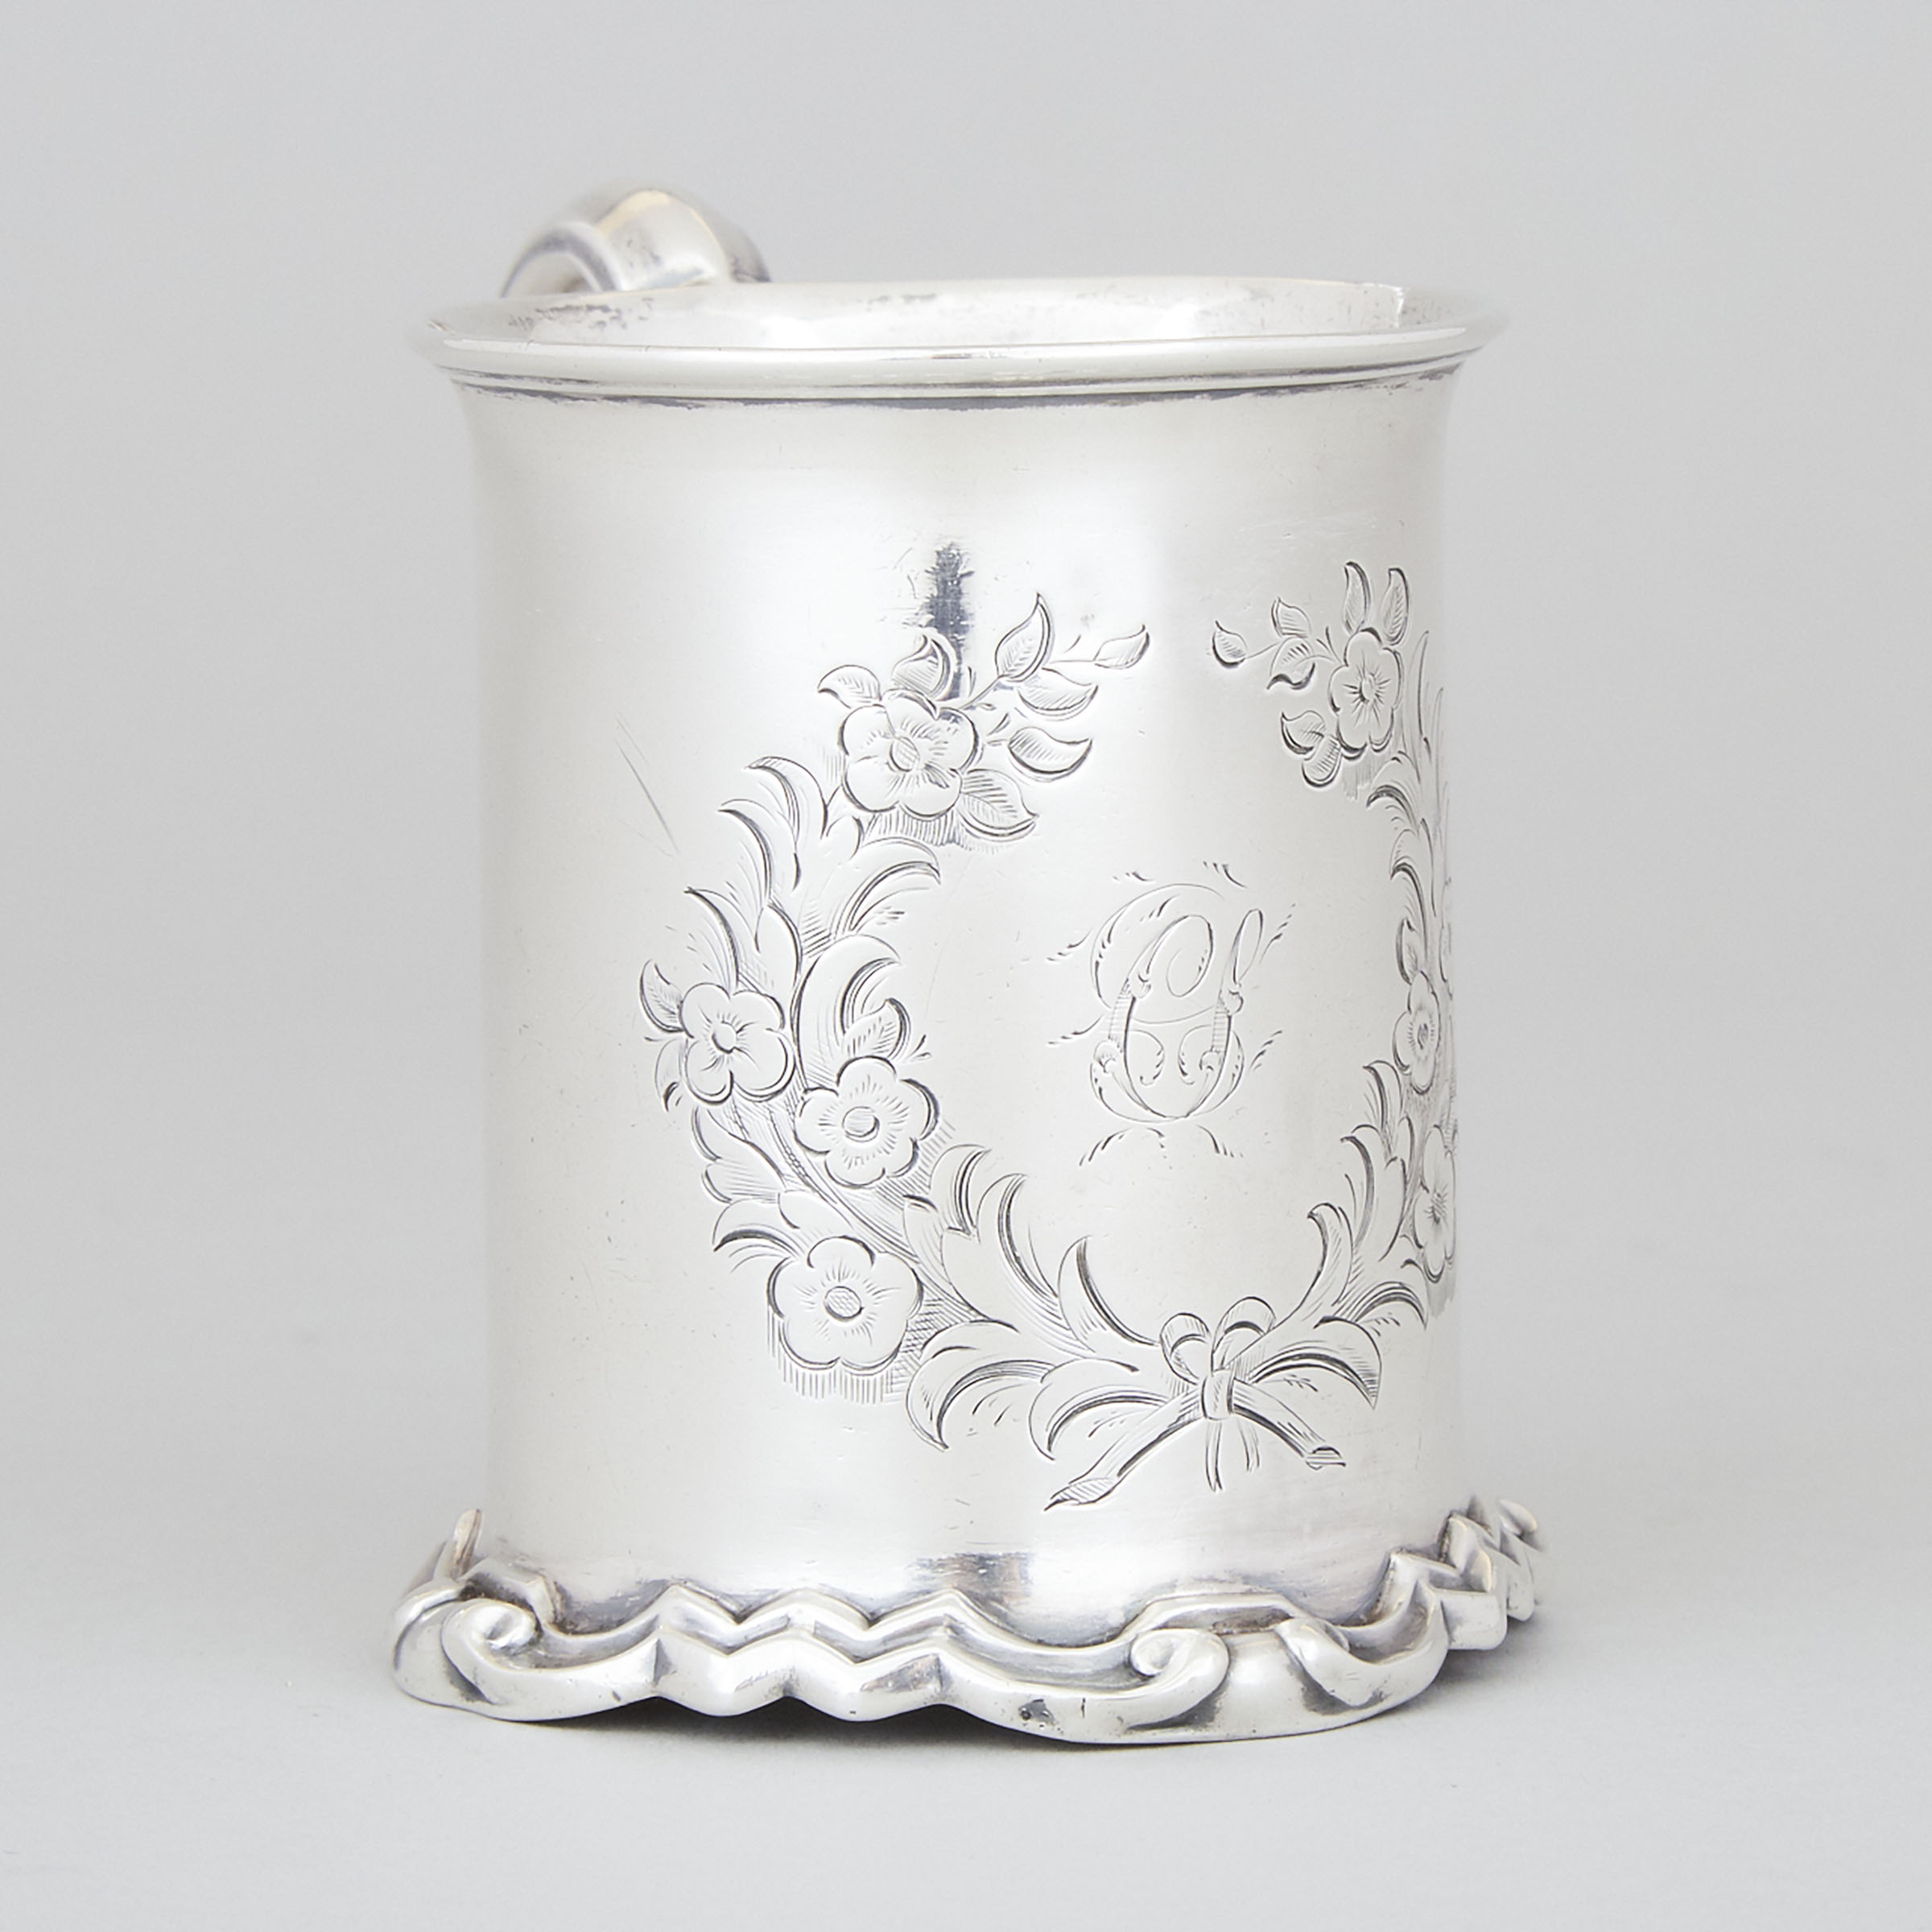 Victorian Silver Small Mug, Henry Wilkinson & Co., Sheffield, 1848